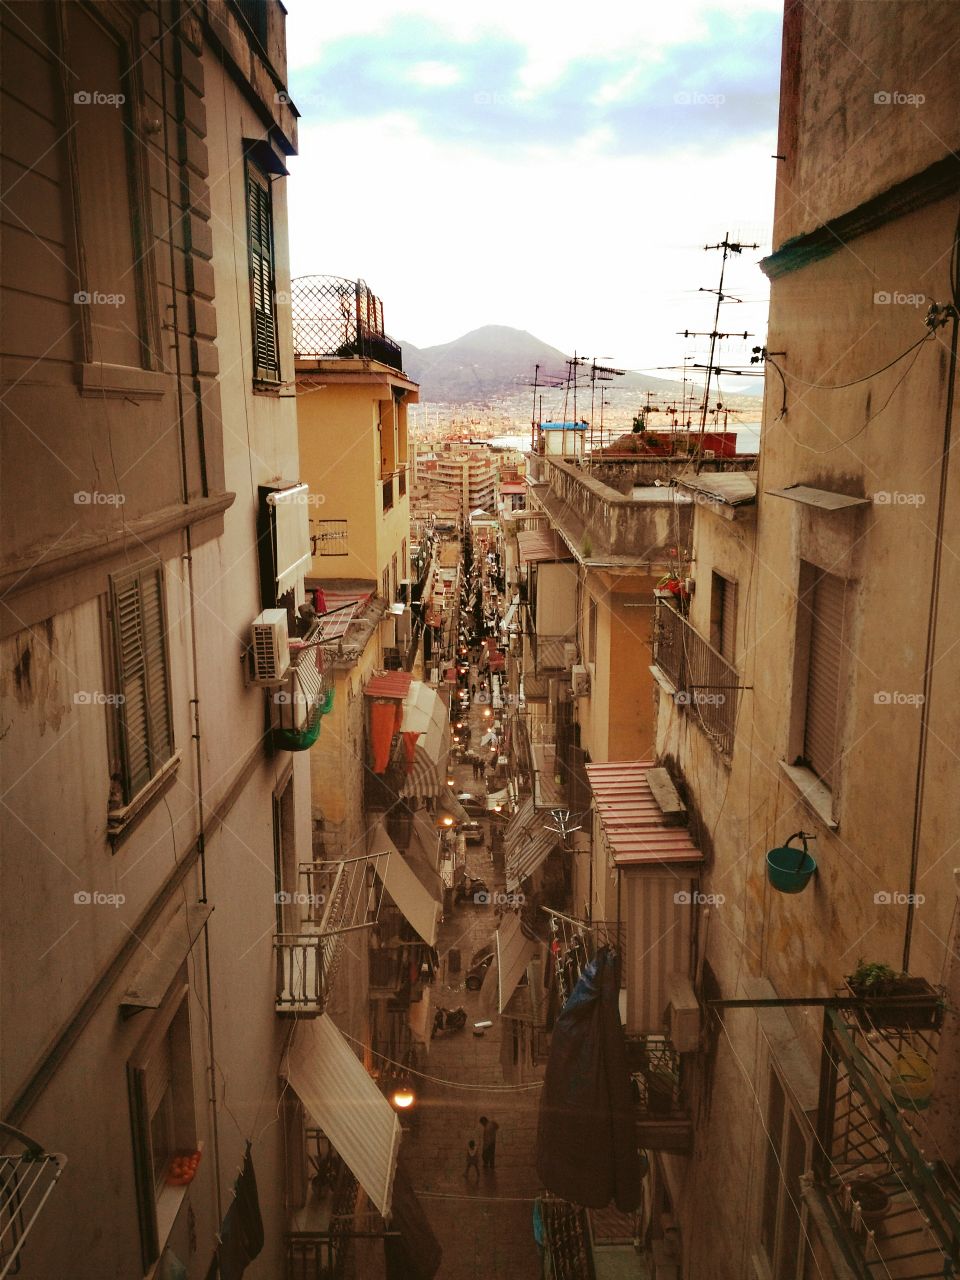 The longest street in Naples